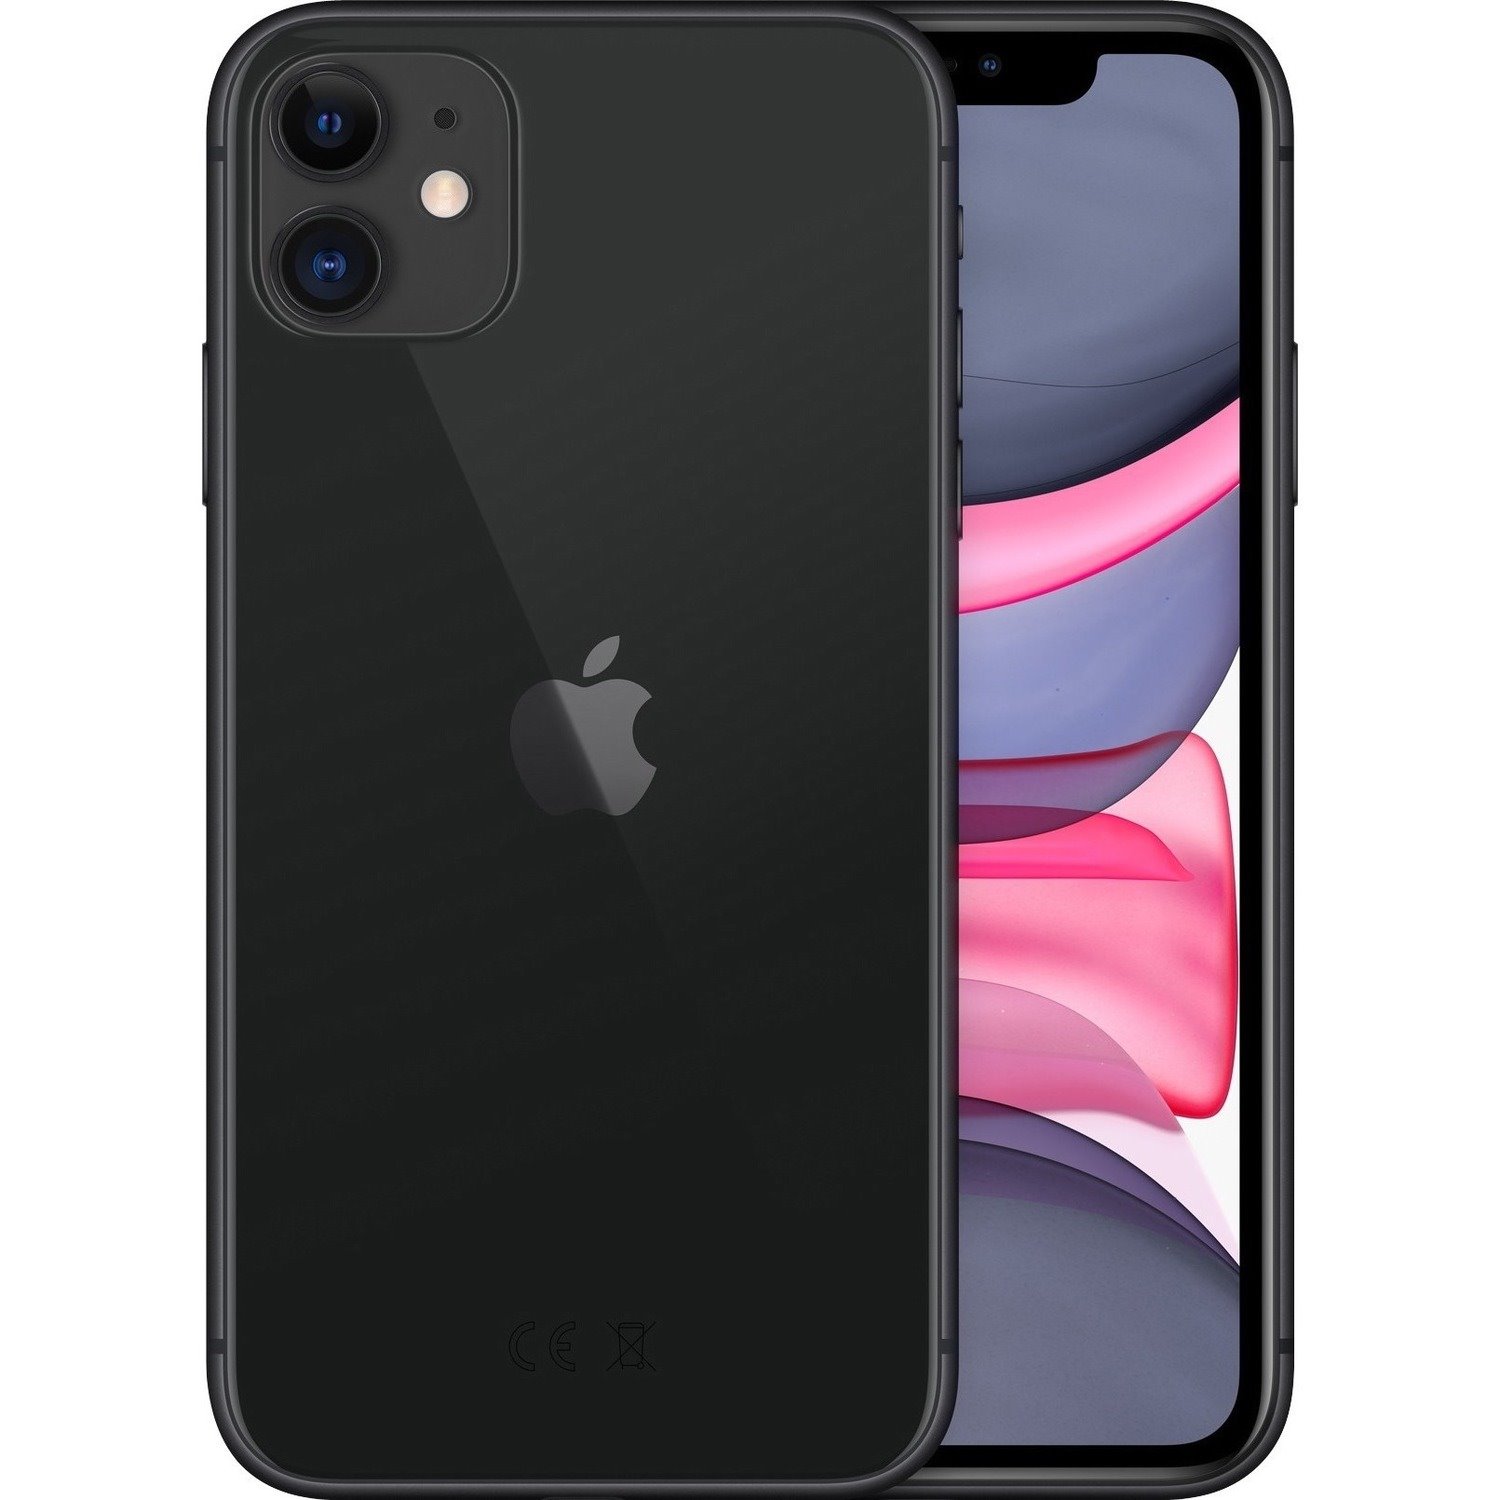 Apple Apple iPhone 11 128 GB Smartphone - 6.1" LCD 1792 x 828 - Hexa-core (LightningDual-core (2 Core) 2.65 GHz + Thunder Quad-core (4 Core) 1.80 GHz - 4 GB RAM - iOS 14 - 4G - Black